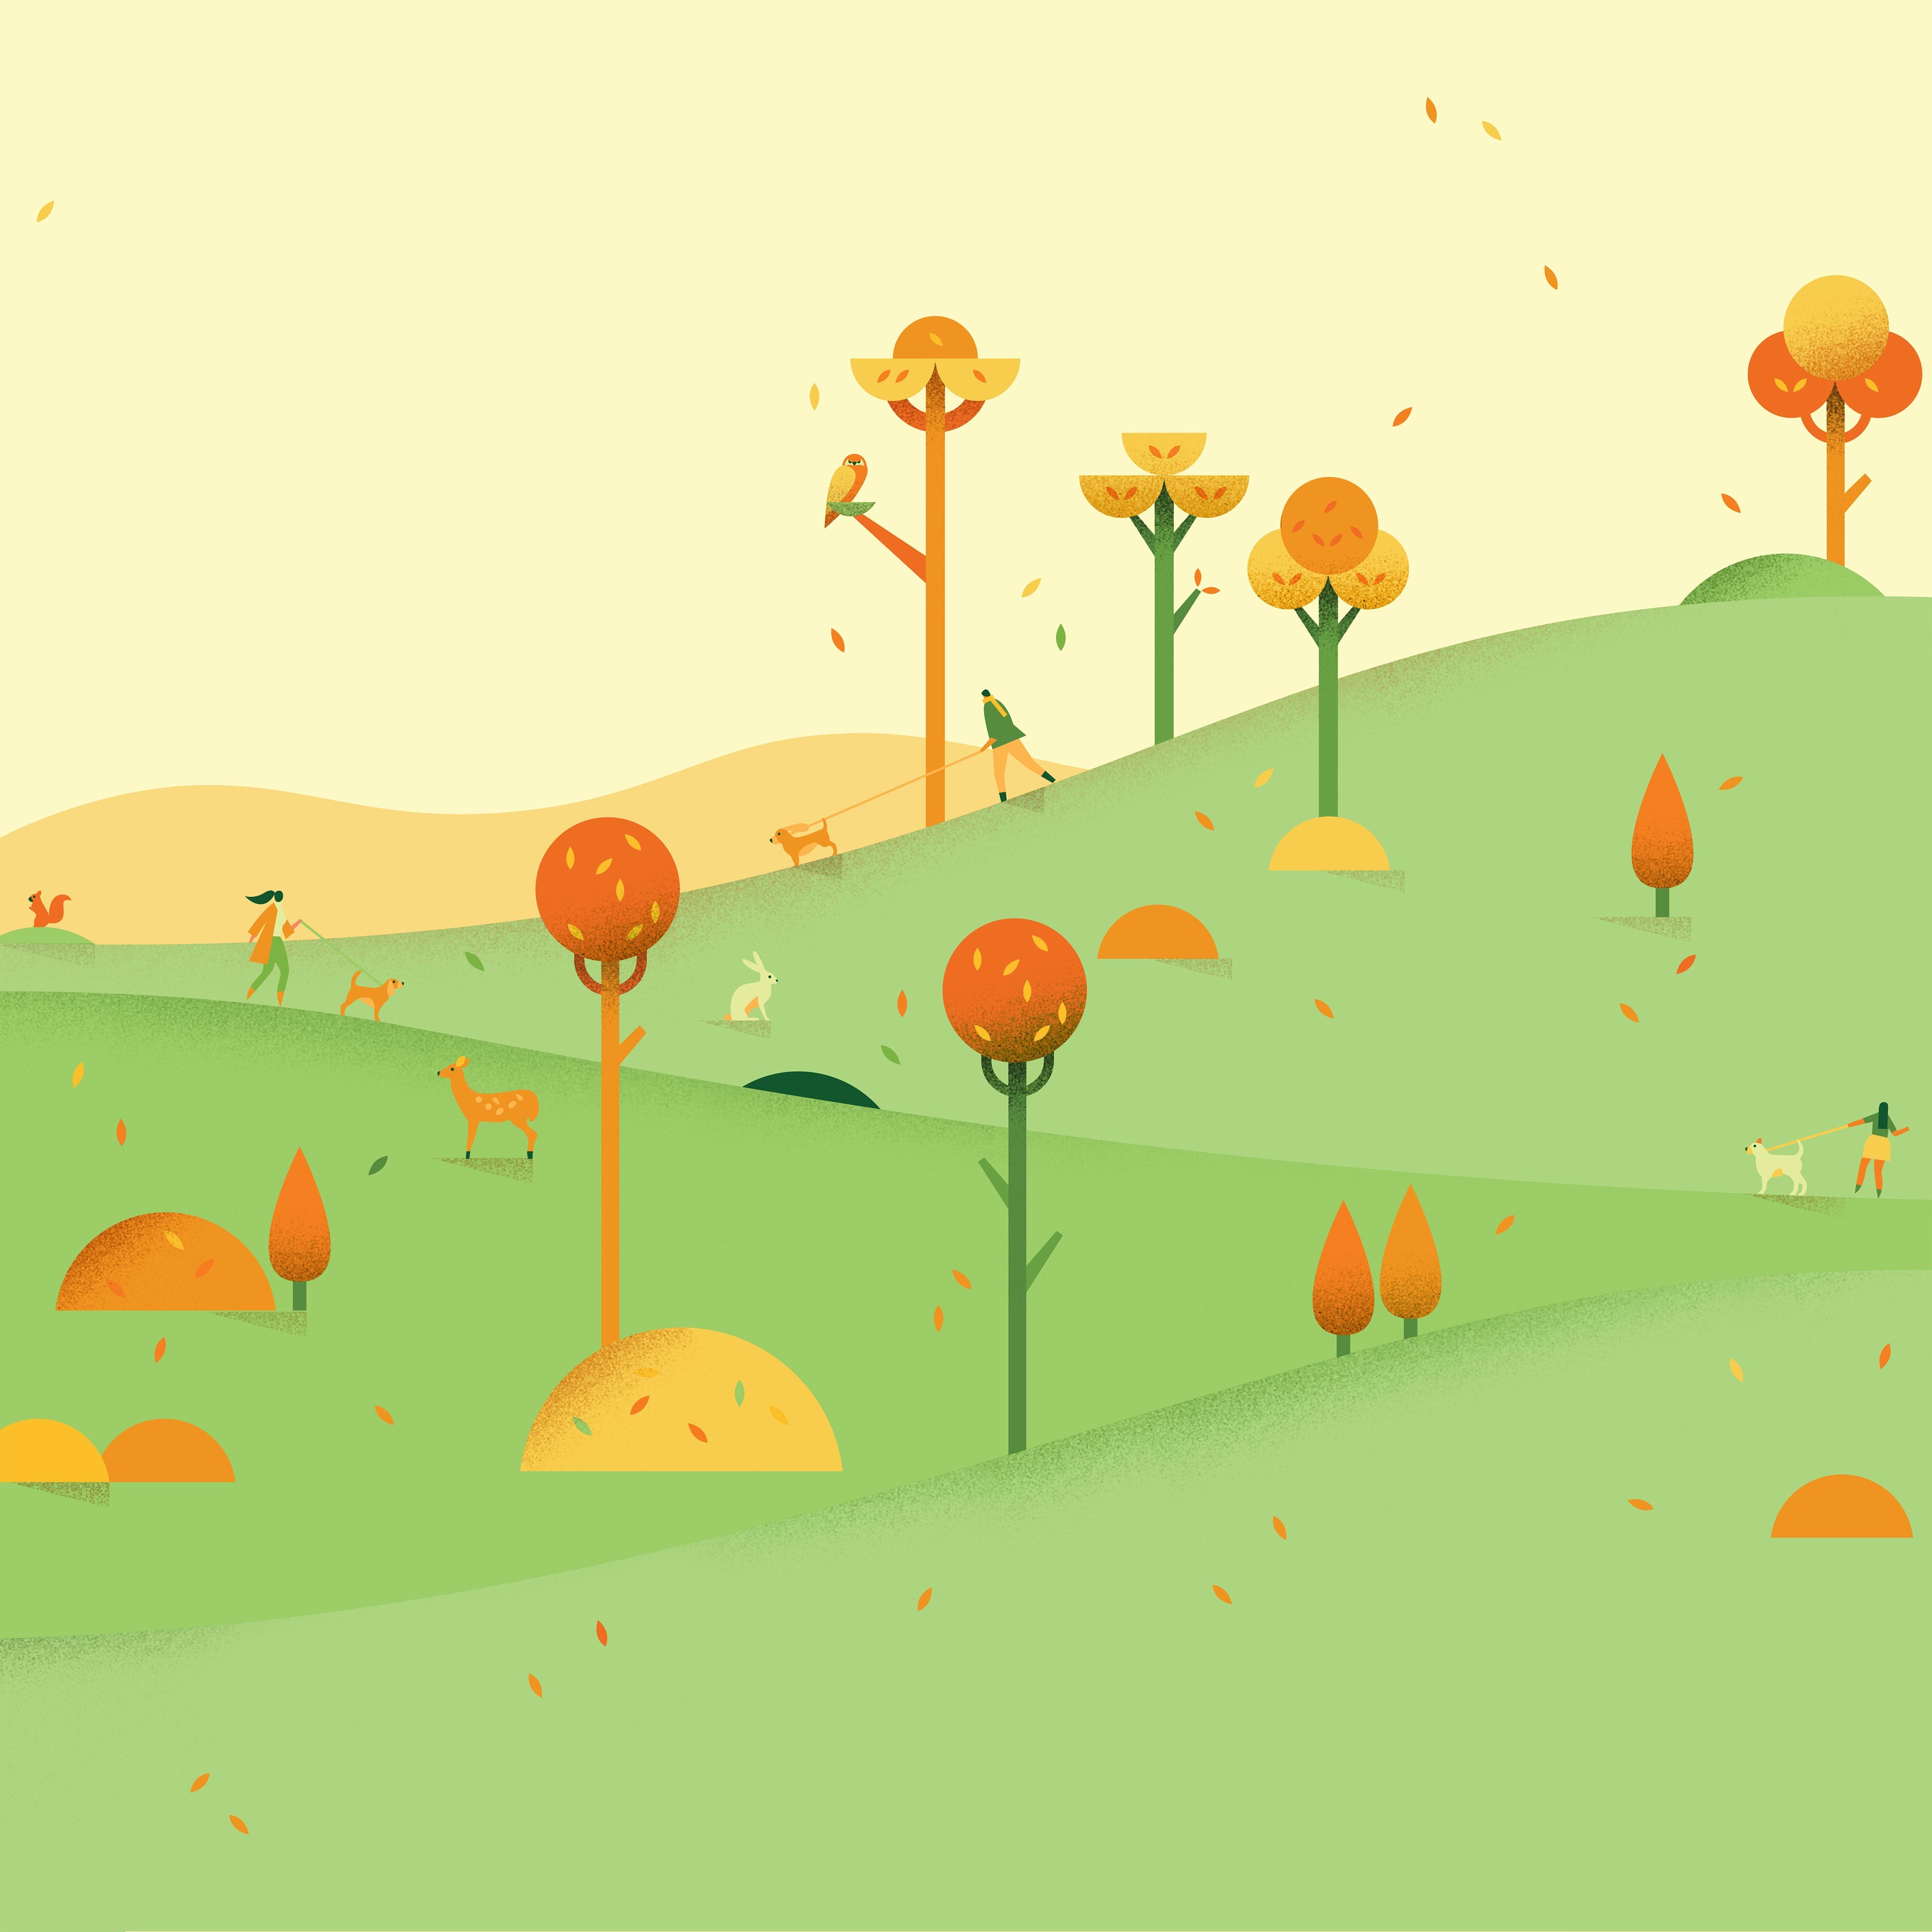 wallpaper android animados,illustration,orange,art,cartoon,ecoregion